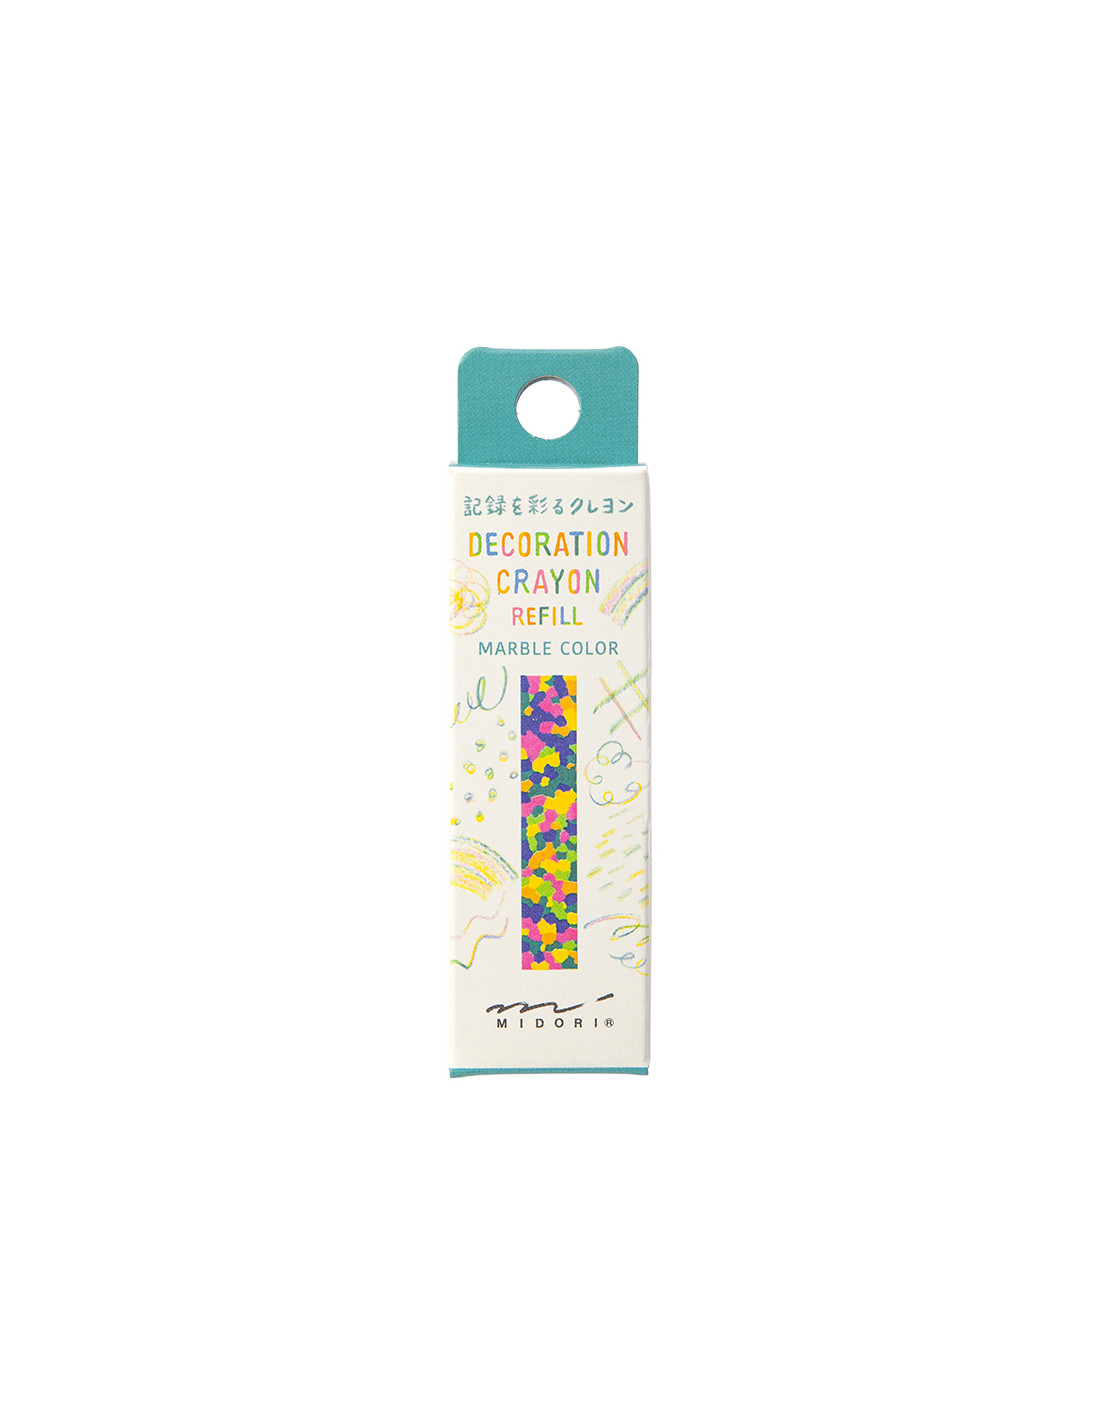 Midori Decoration Crayon Refill - Marble Color - Rainbow